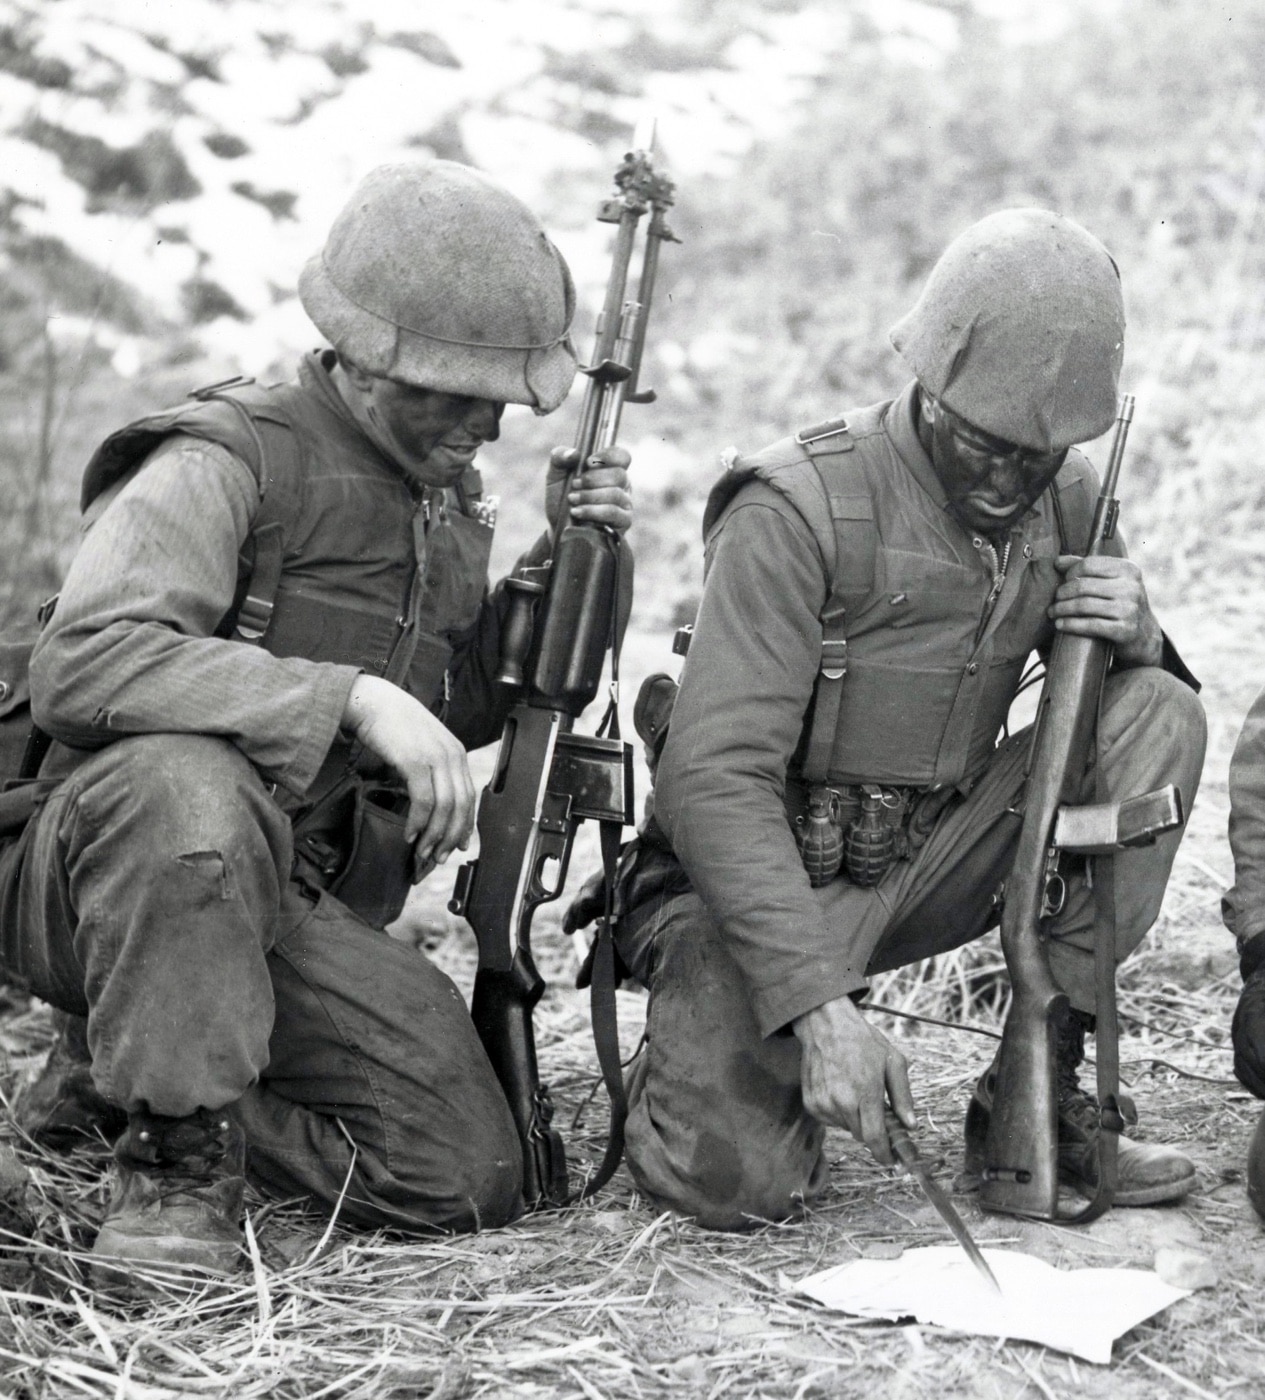 US soldiers wearing body armory in Korean War